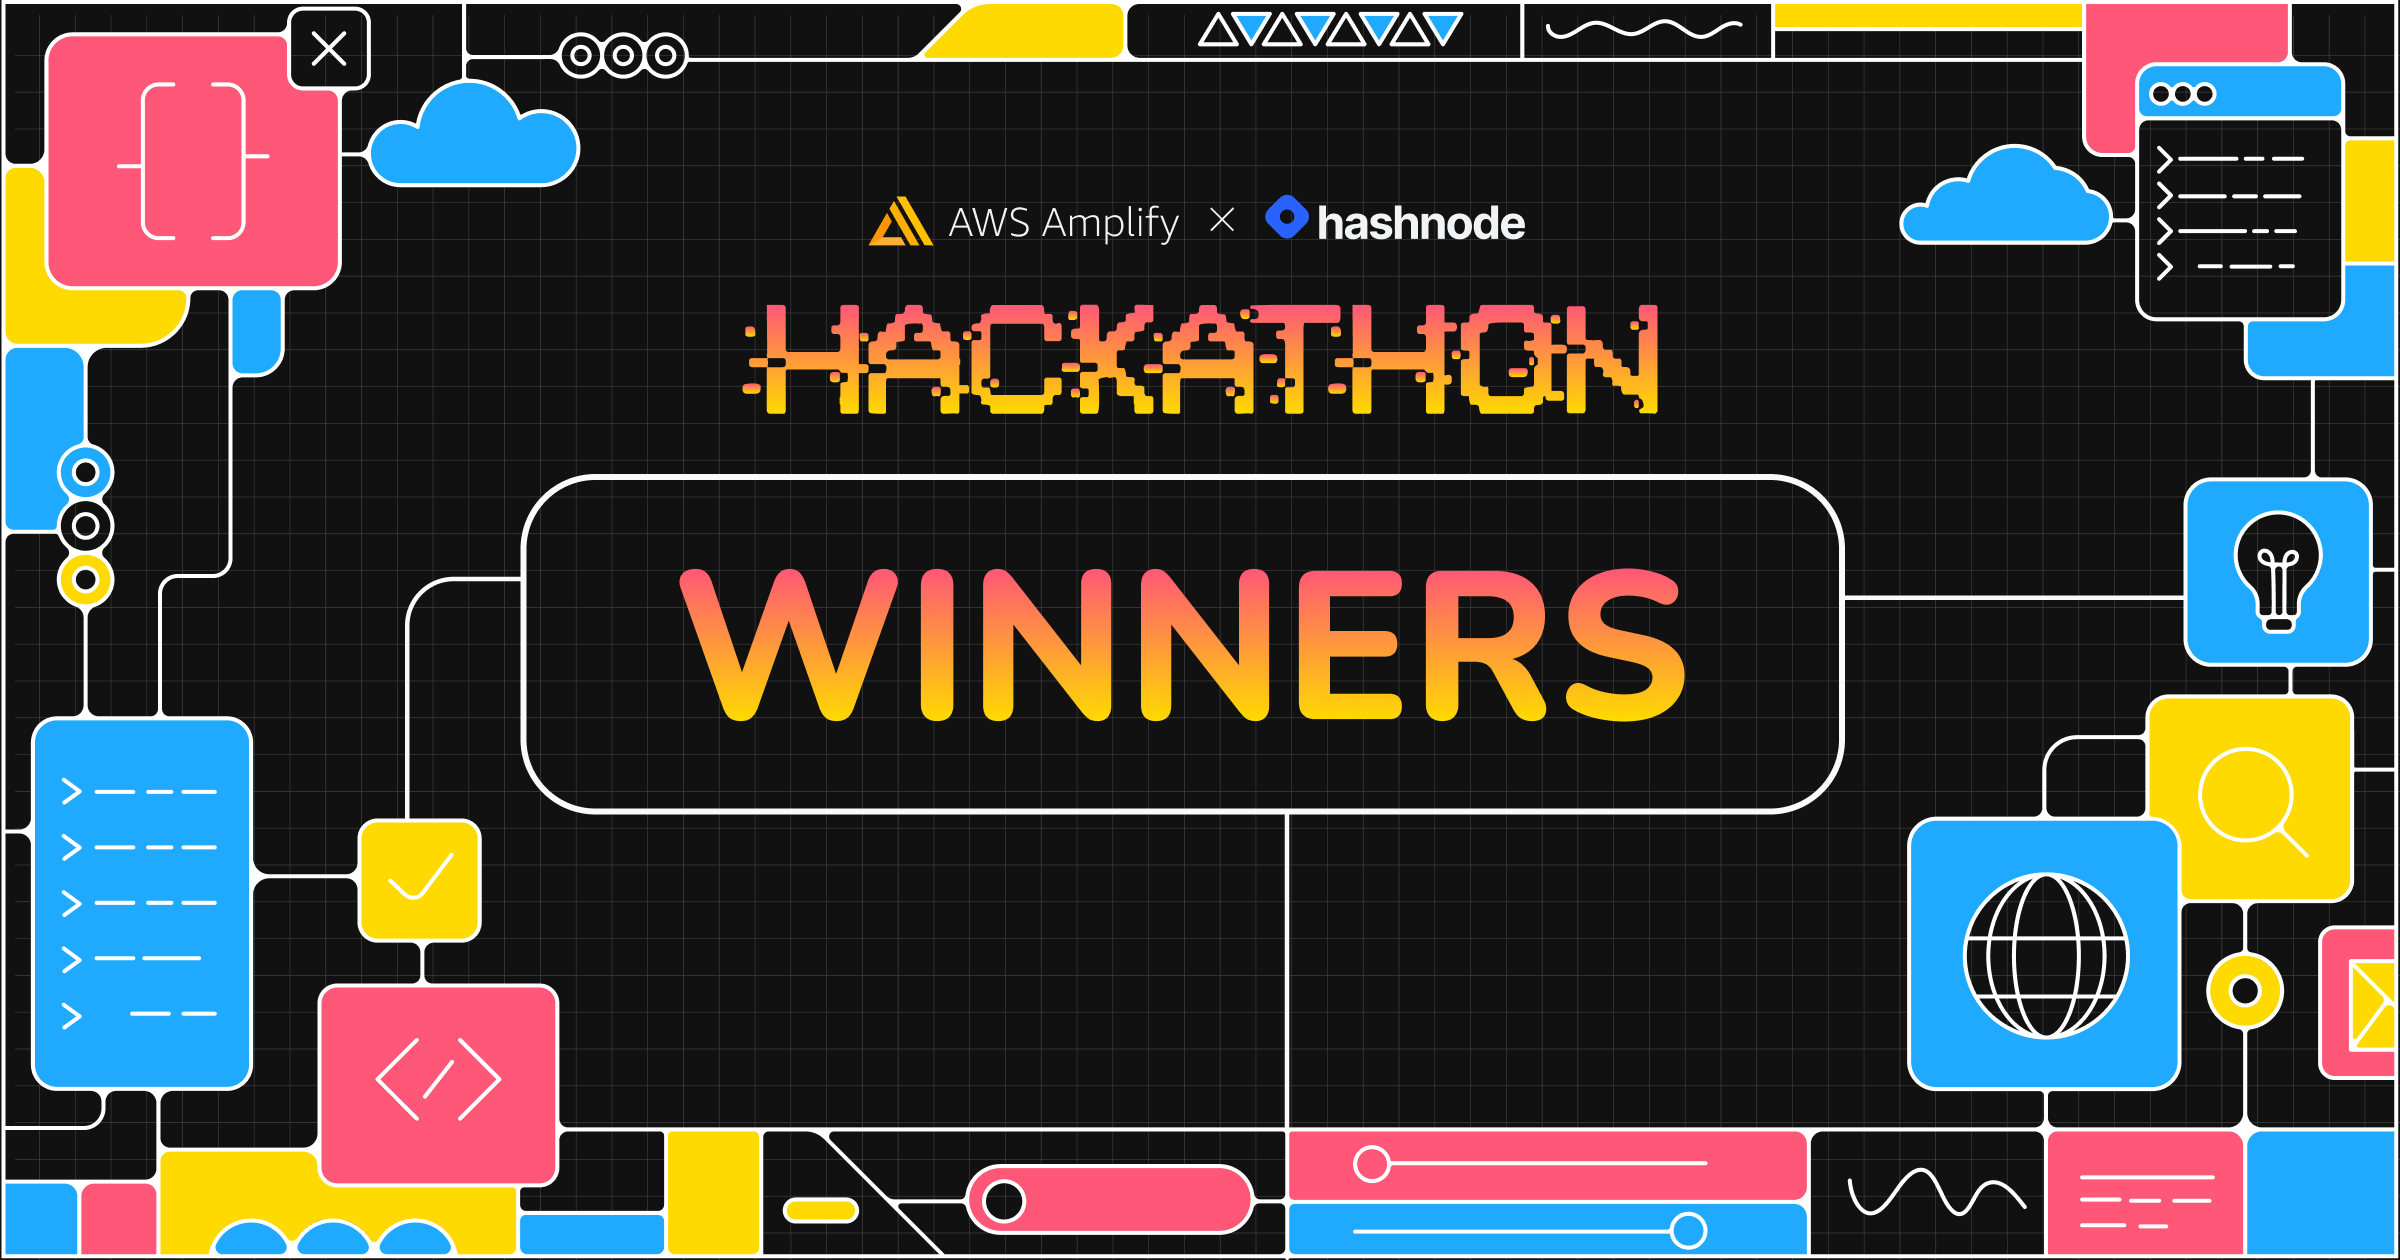 ZetaChain X TreeHacks Hackathon Winners, by ZetaChain Blog